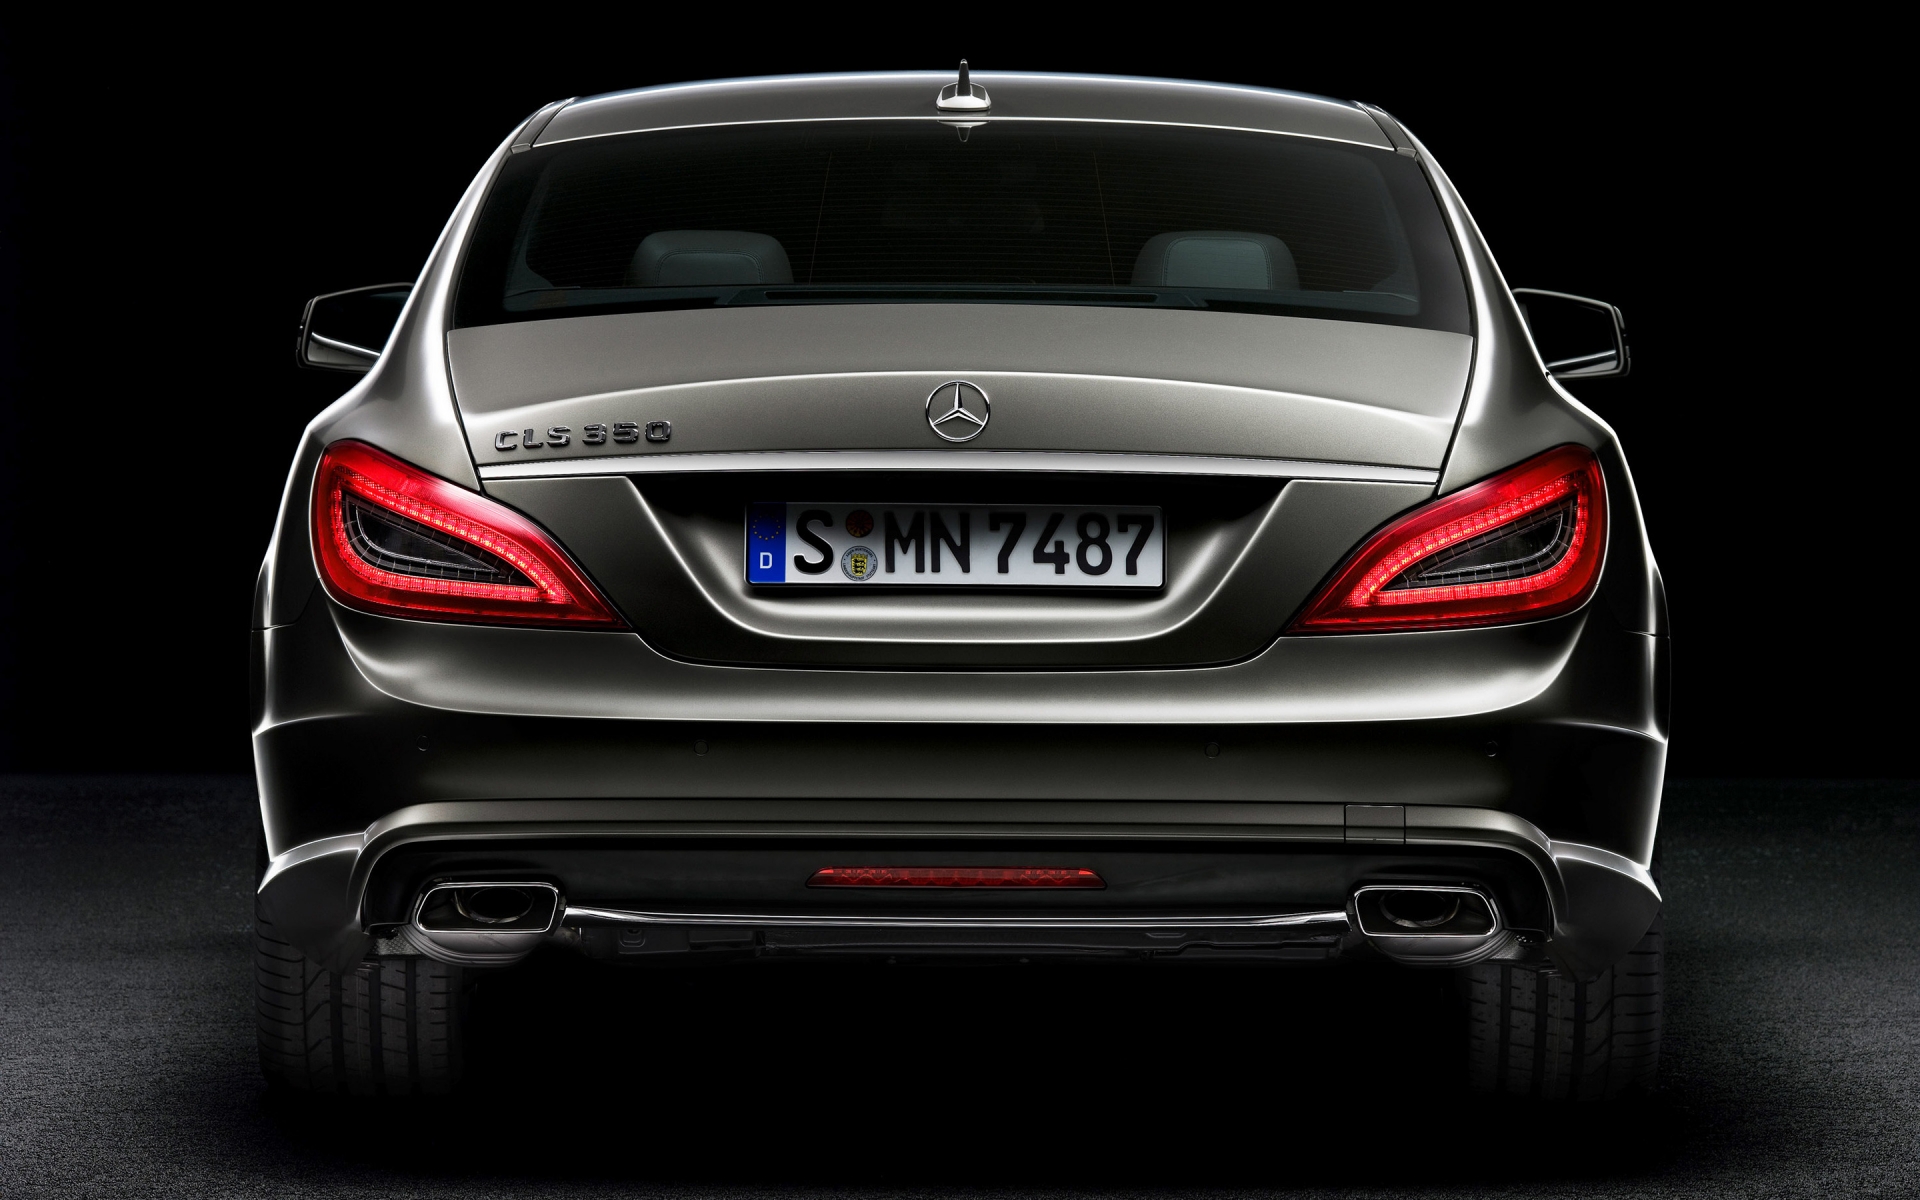 2012 Mercedes Benz CLS Rear for 1920 x 1200 widescreen resolution